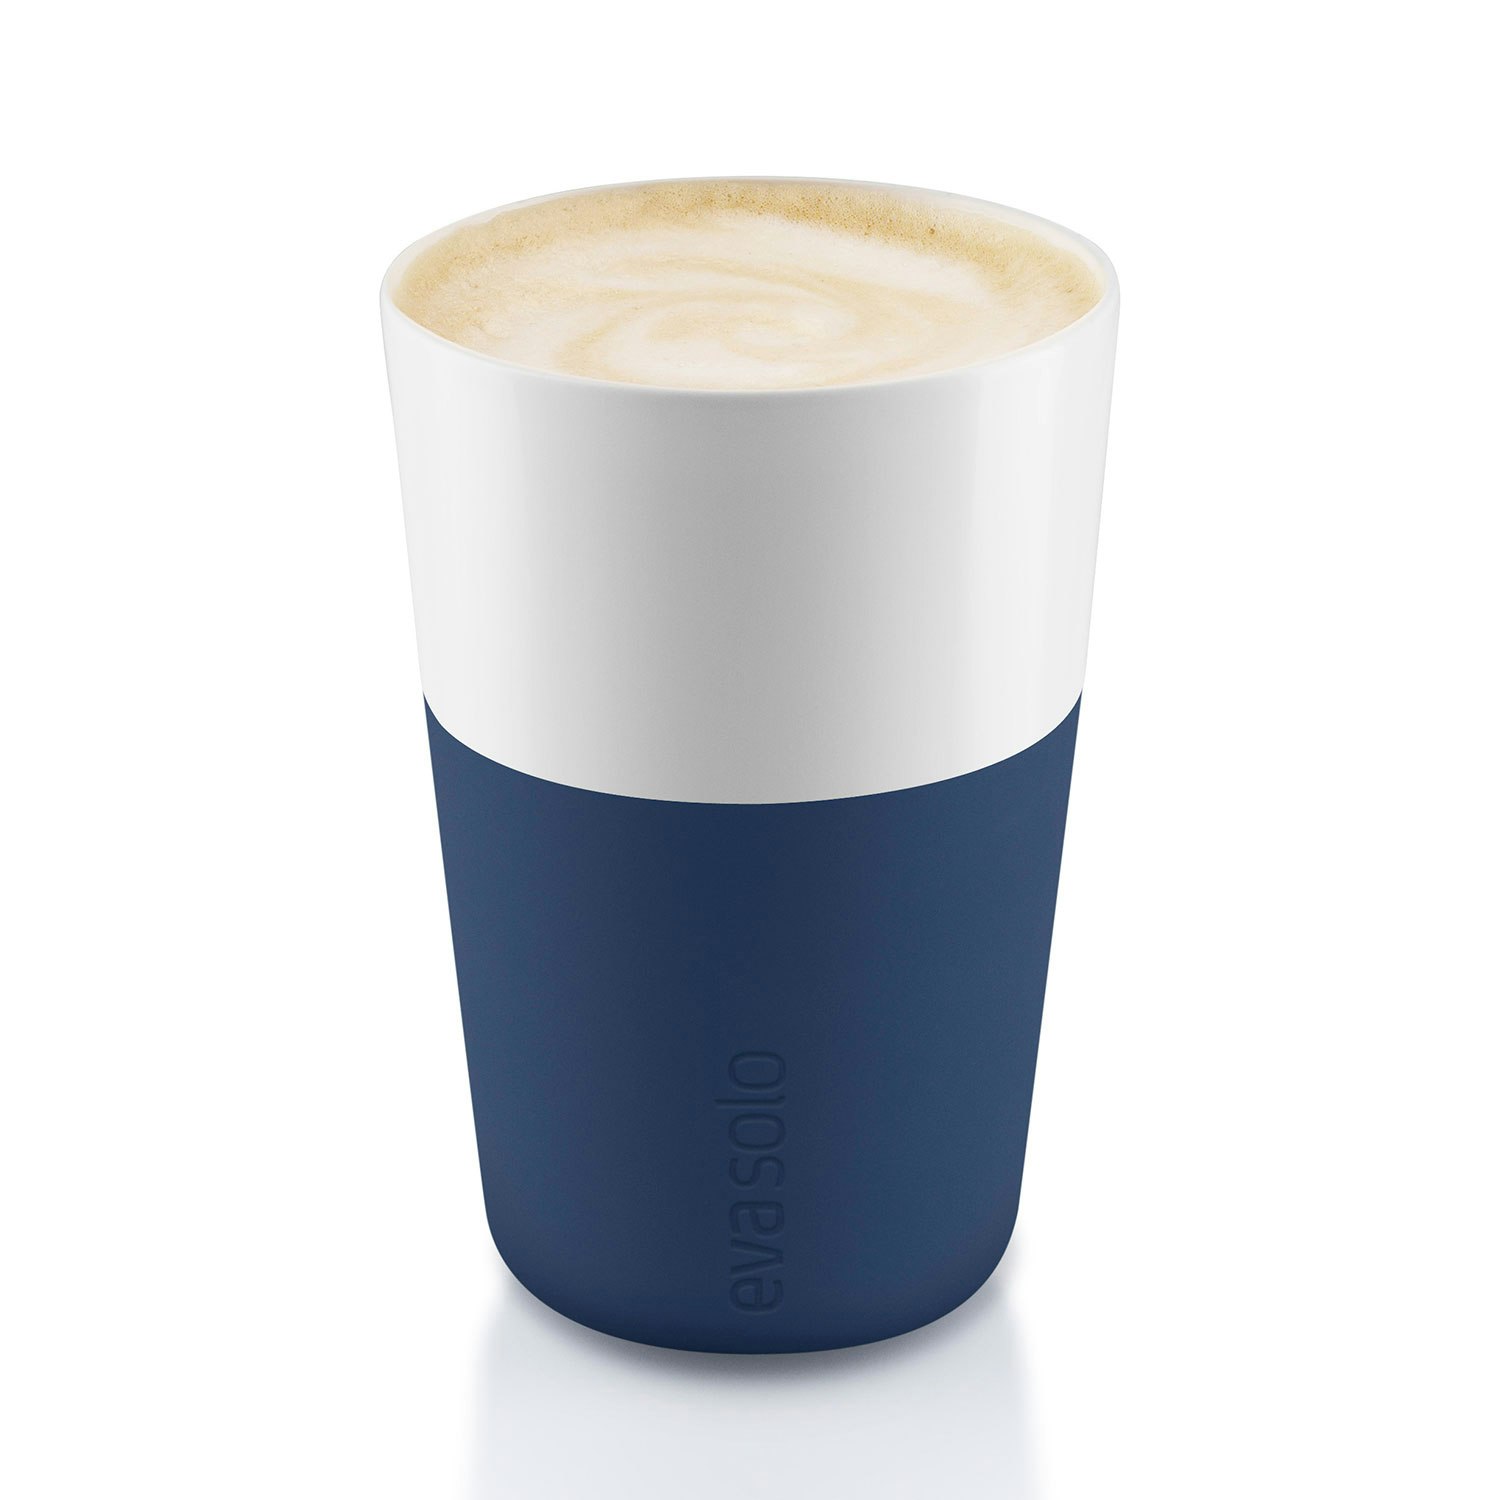 https://royaldesign.com/image/2/eva-solo-cafe-latte-mug-36-cl-2-pack-6